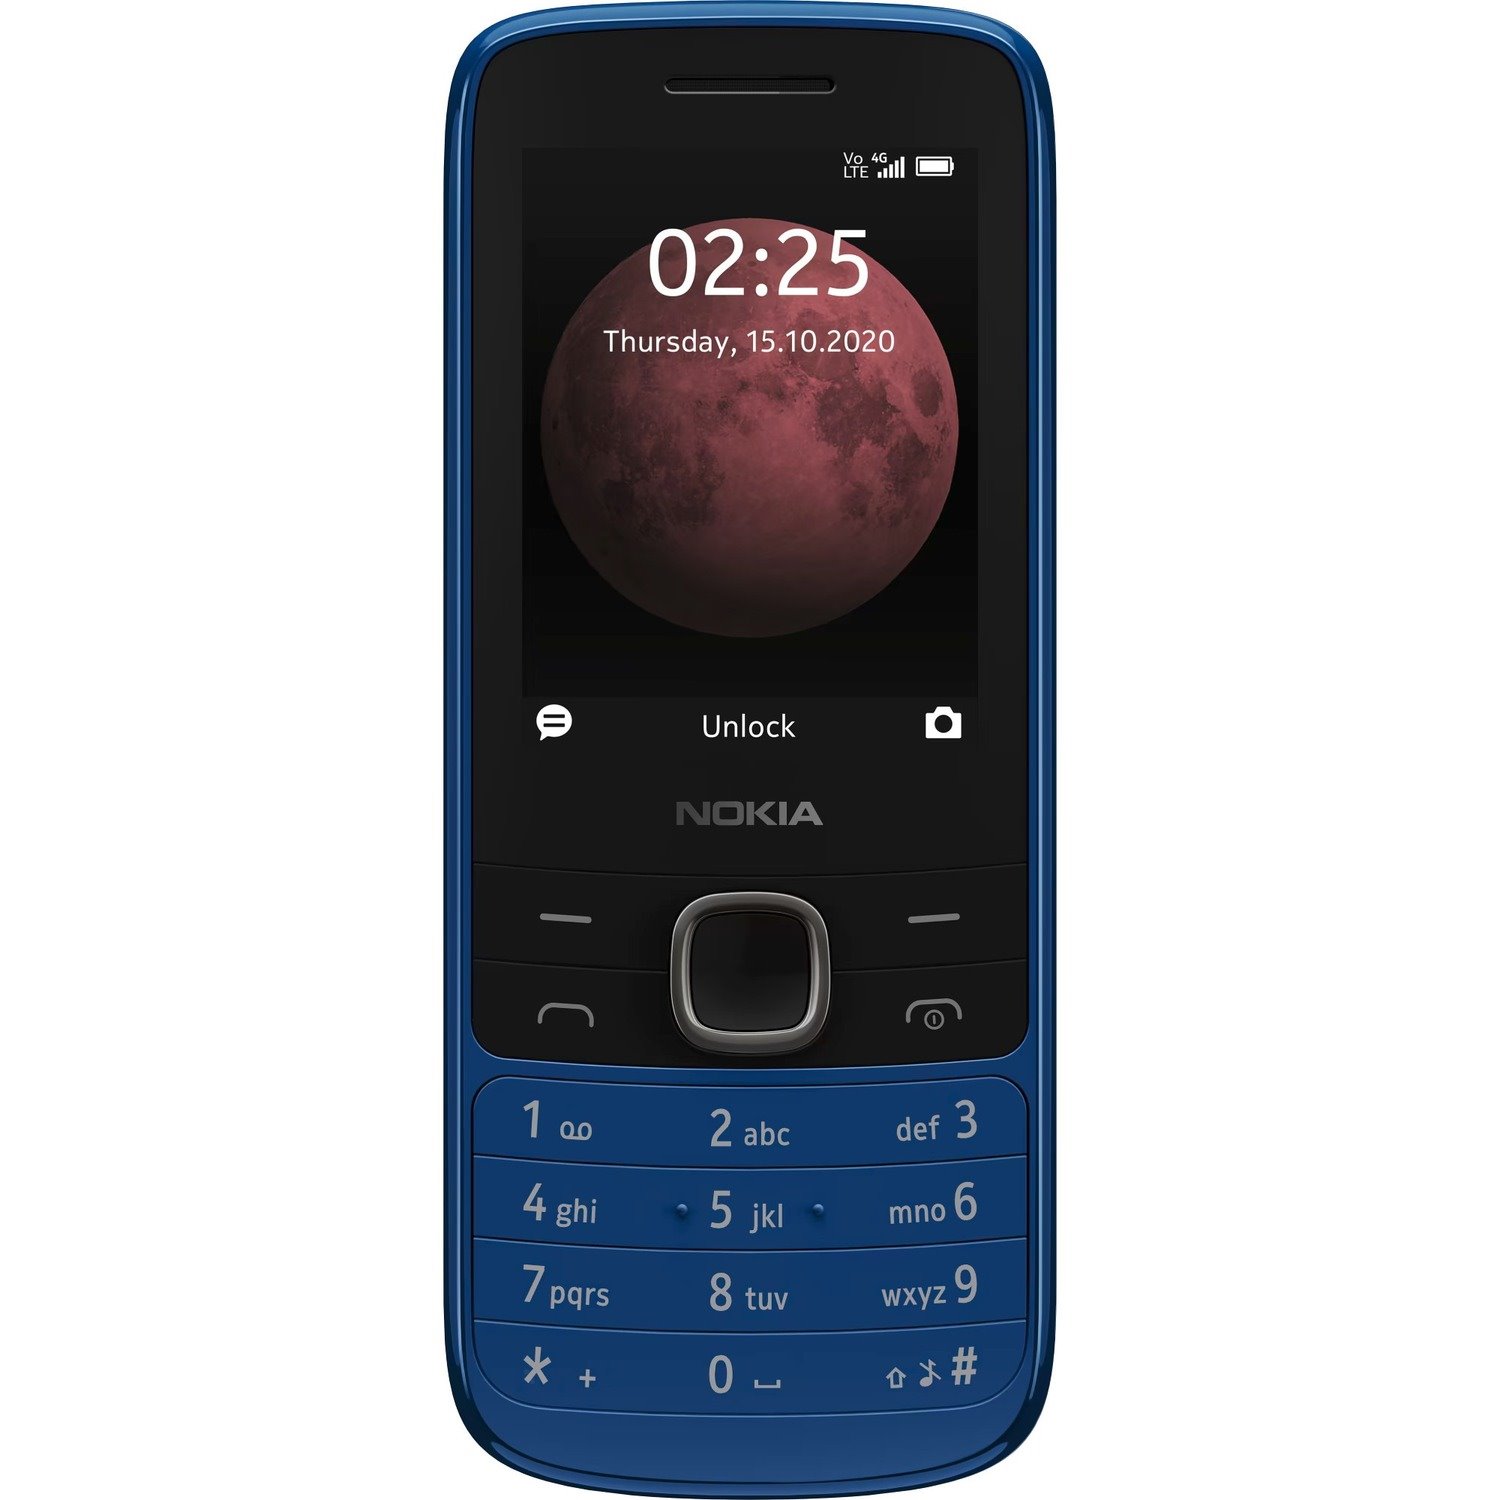 Nokia 225 4G 128 MB Feature Phone - 6.1 cm (2.4") TFT LCD QVGA 240 x 320 - 64 MB RAM - 4G - Blue